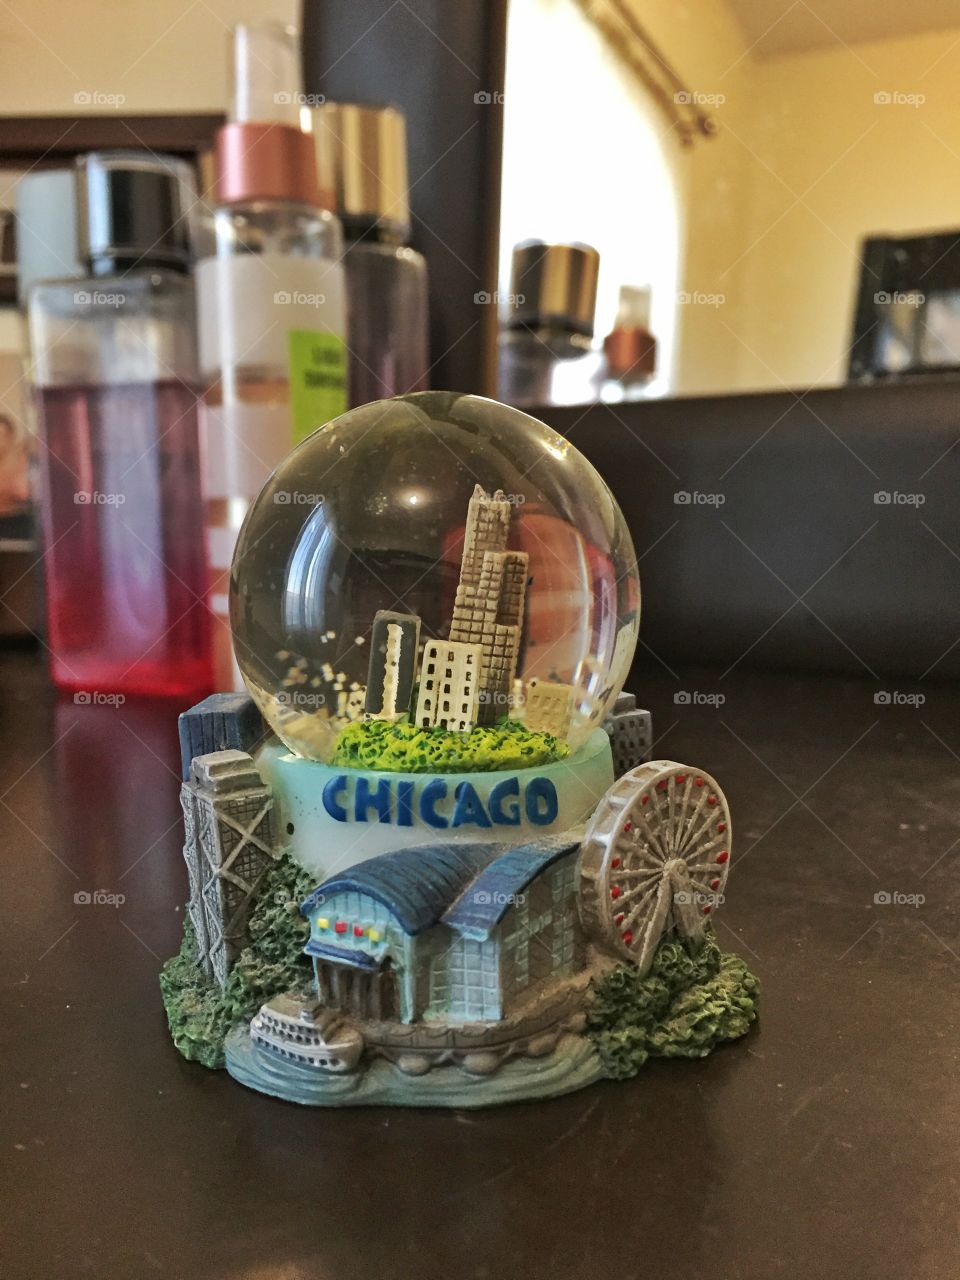 Chicago snowball